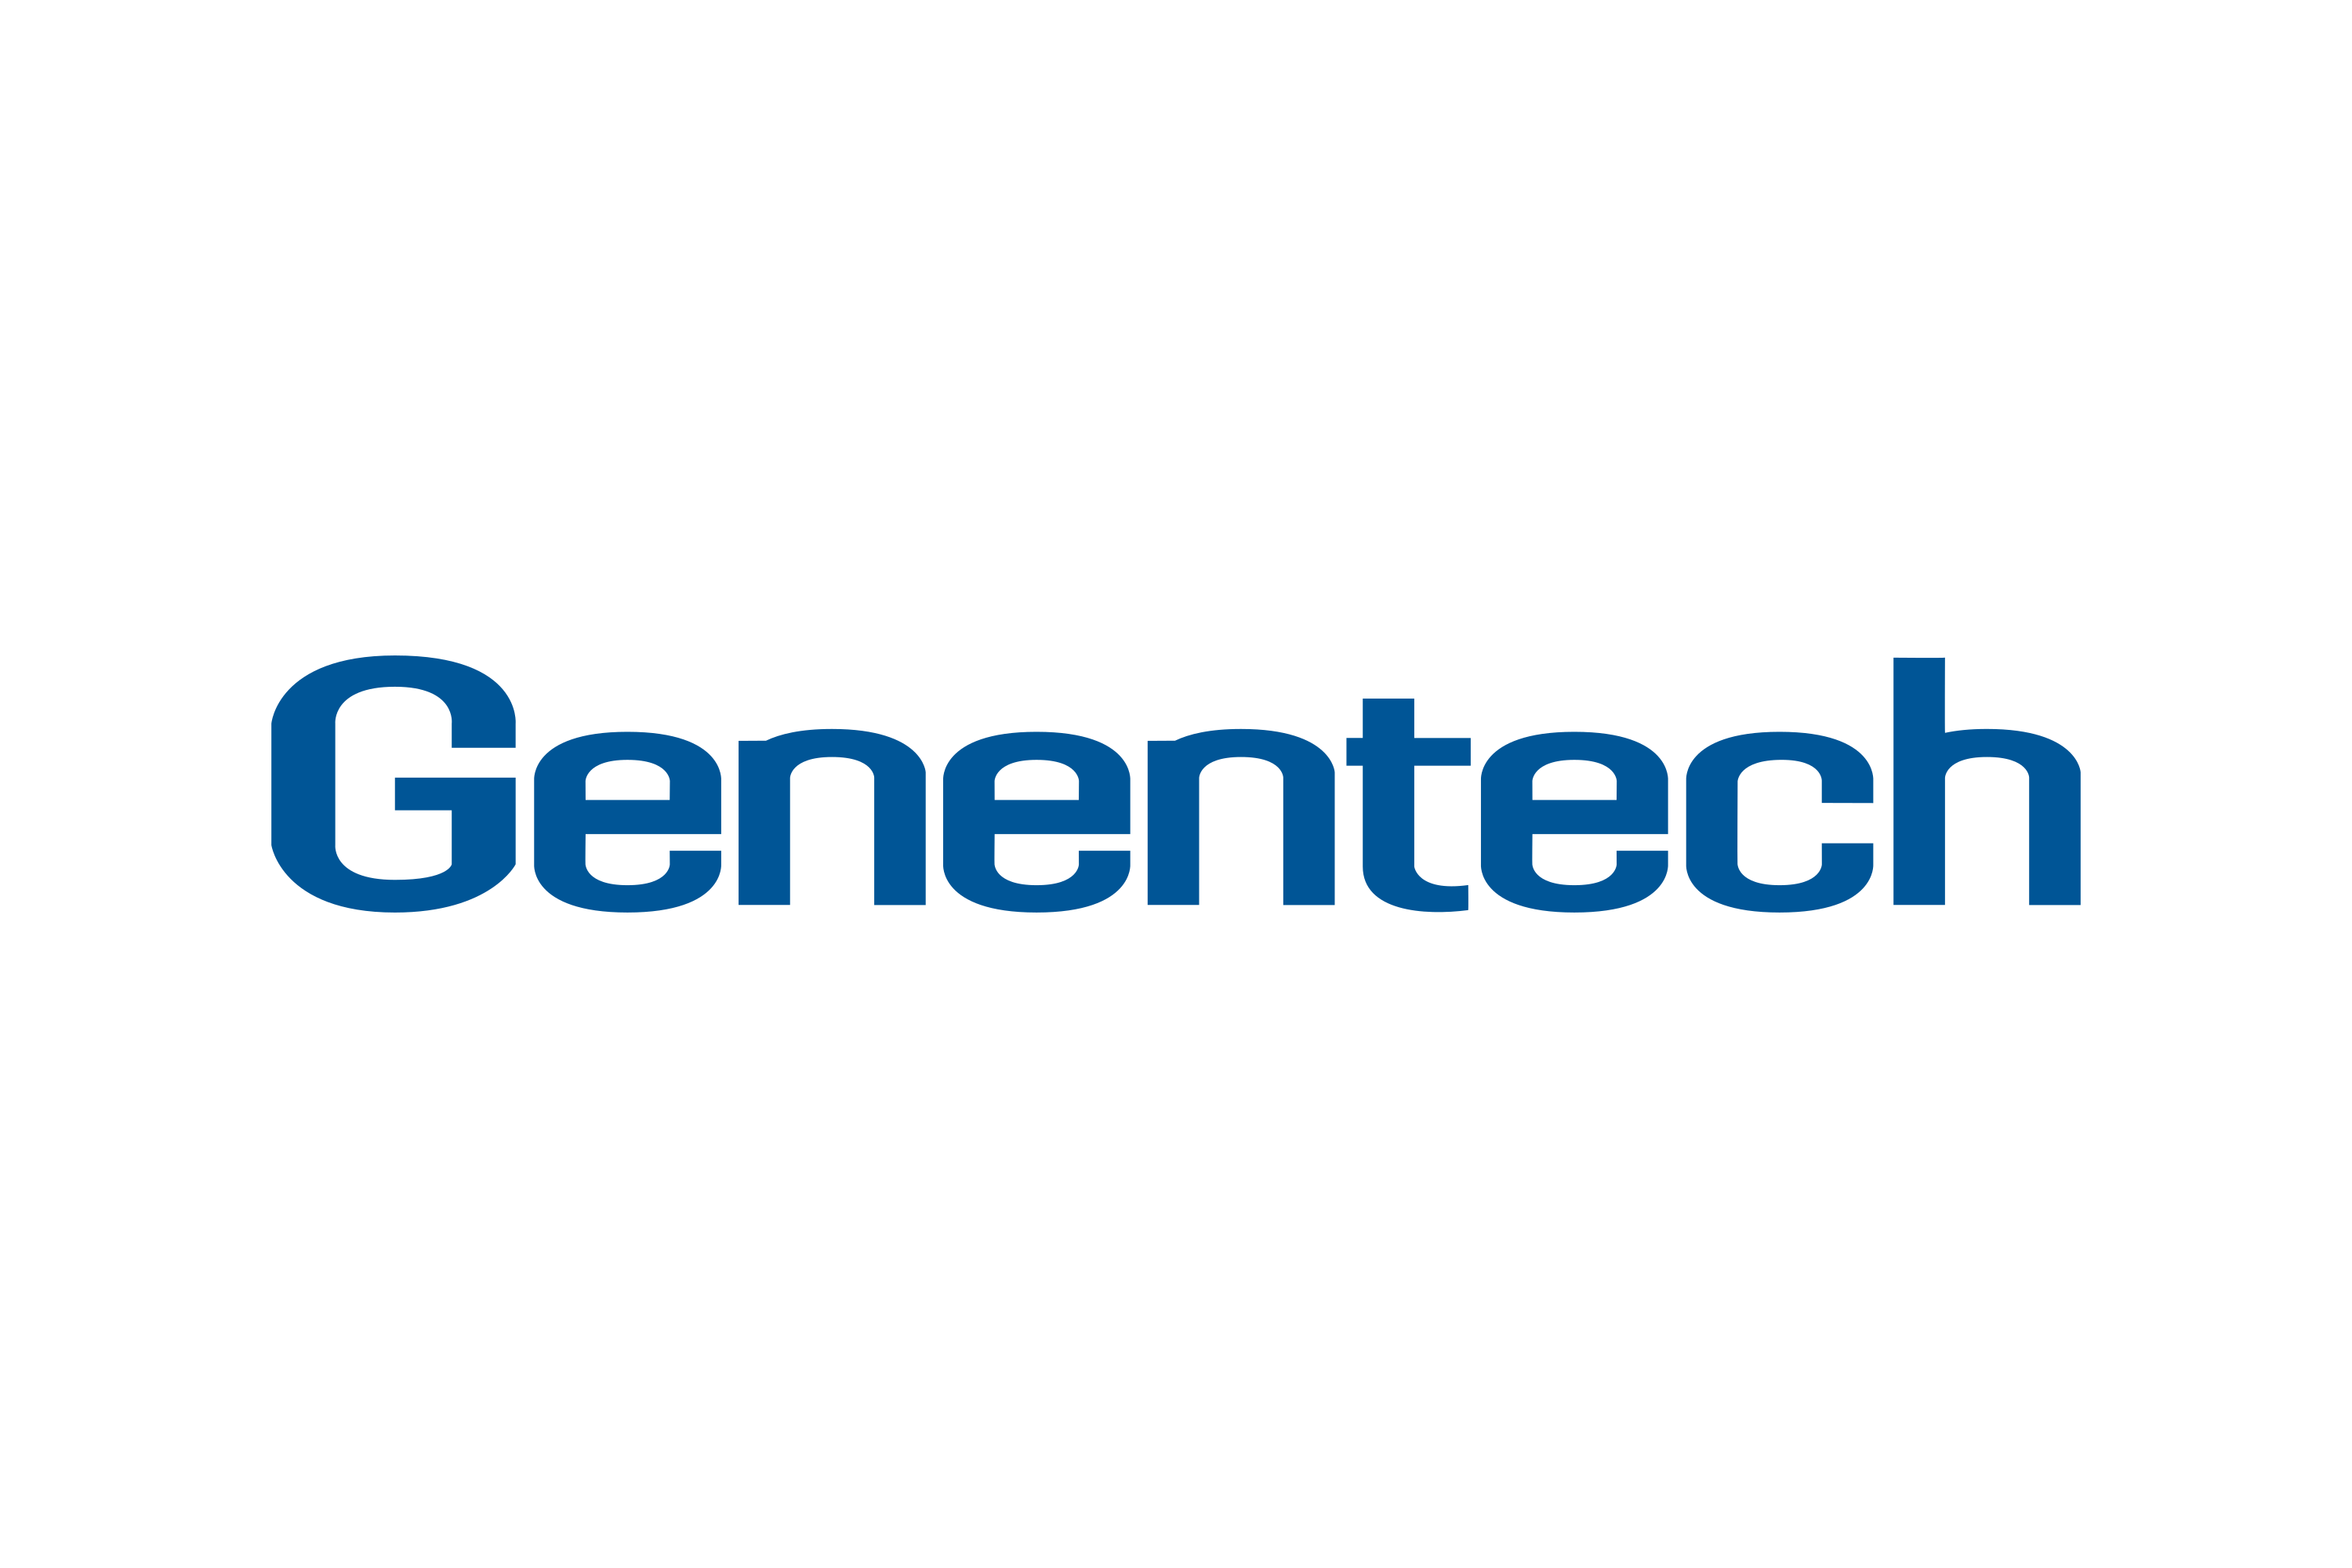 Download Genentech Logo in SVG Vector or PNG File Format - Logo.wine